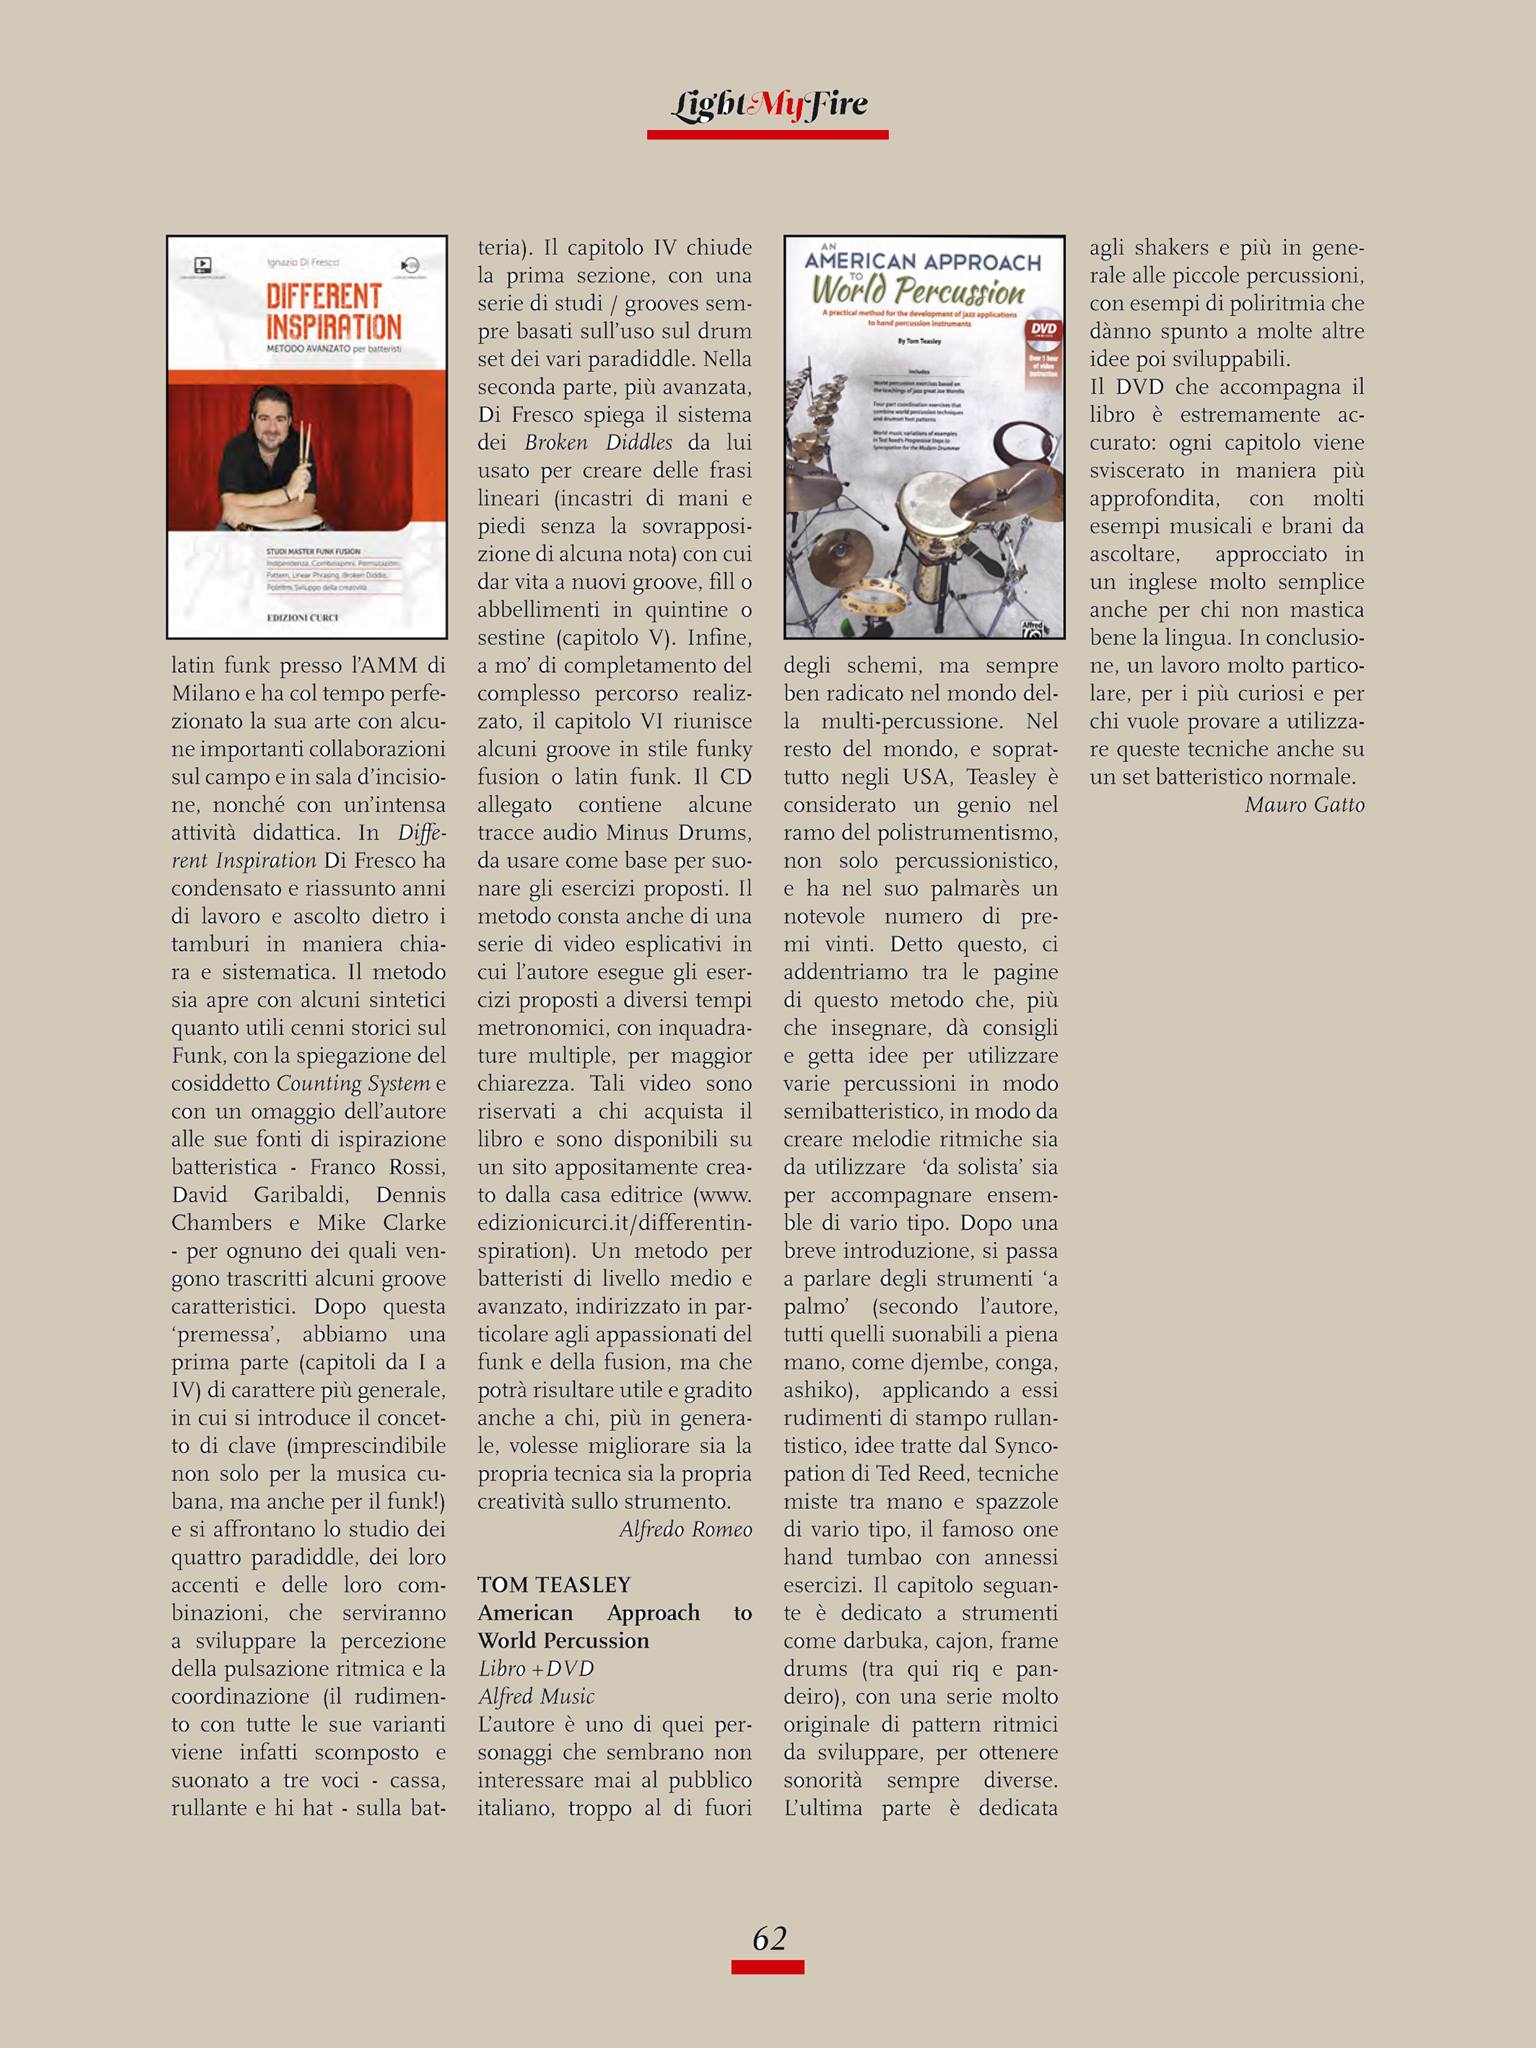 Italian Publication 